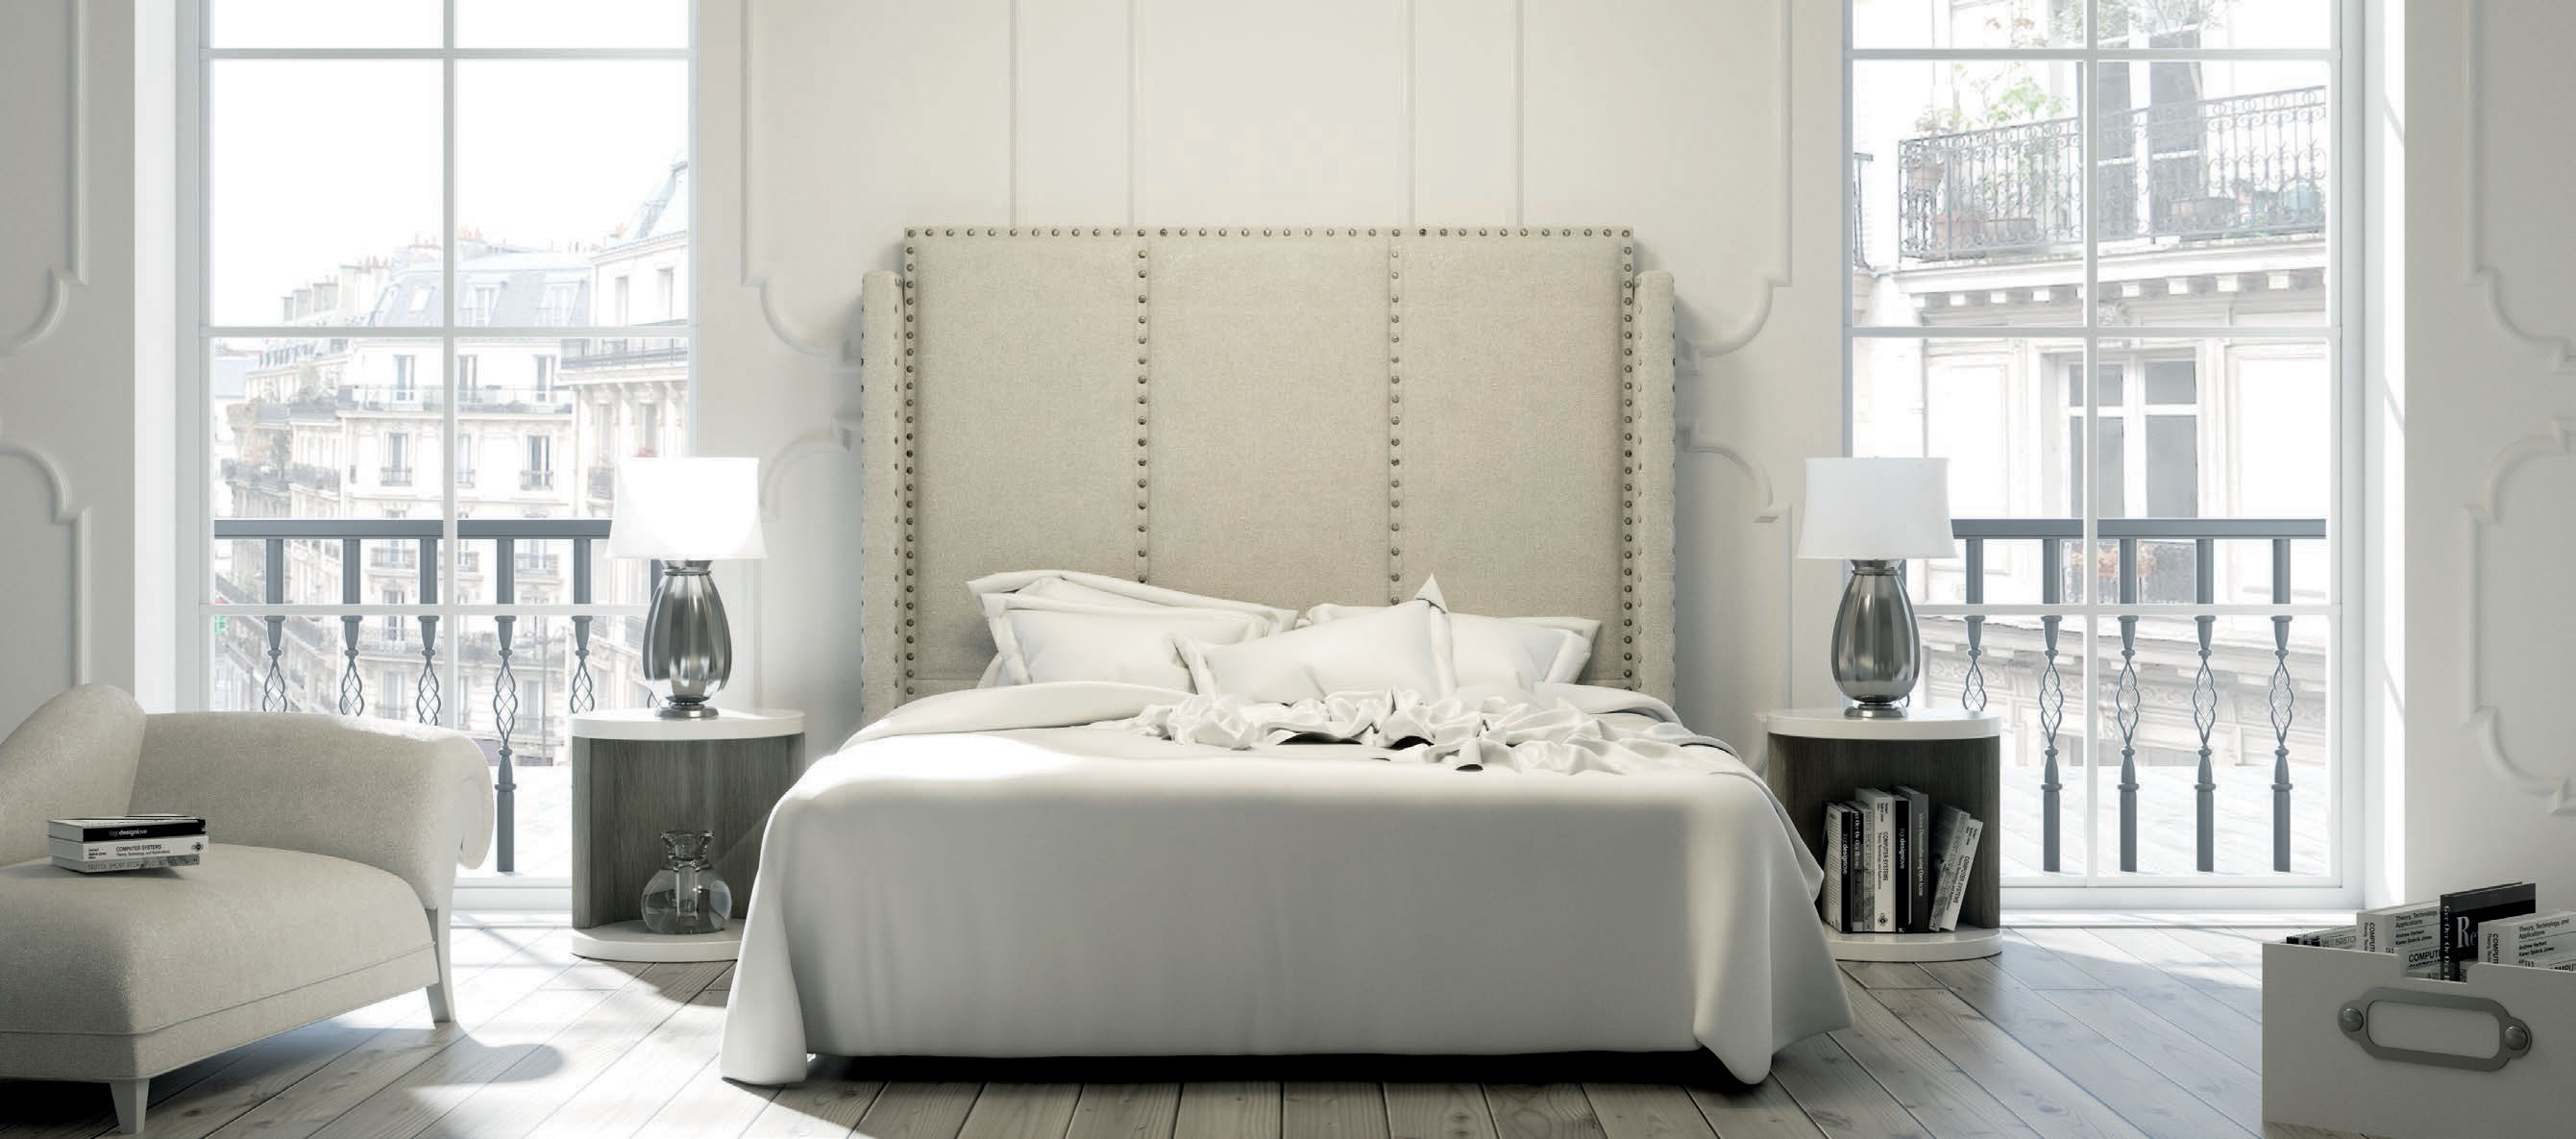 Brands Franco Furniture Bedrooms vol3, Spain DOR 152